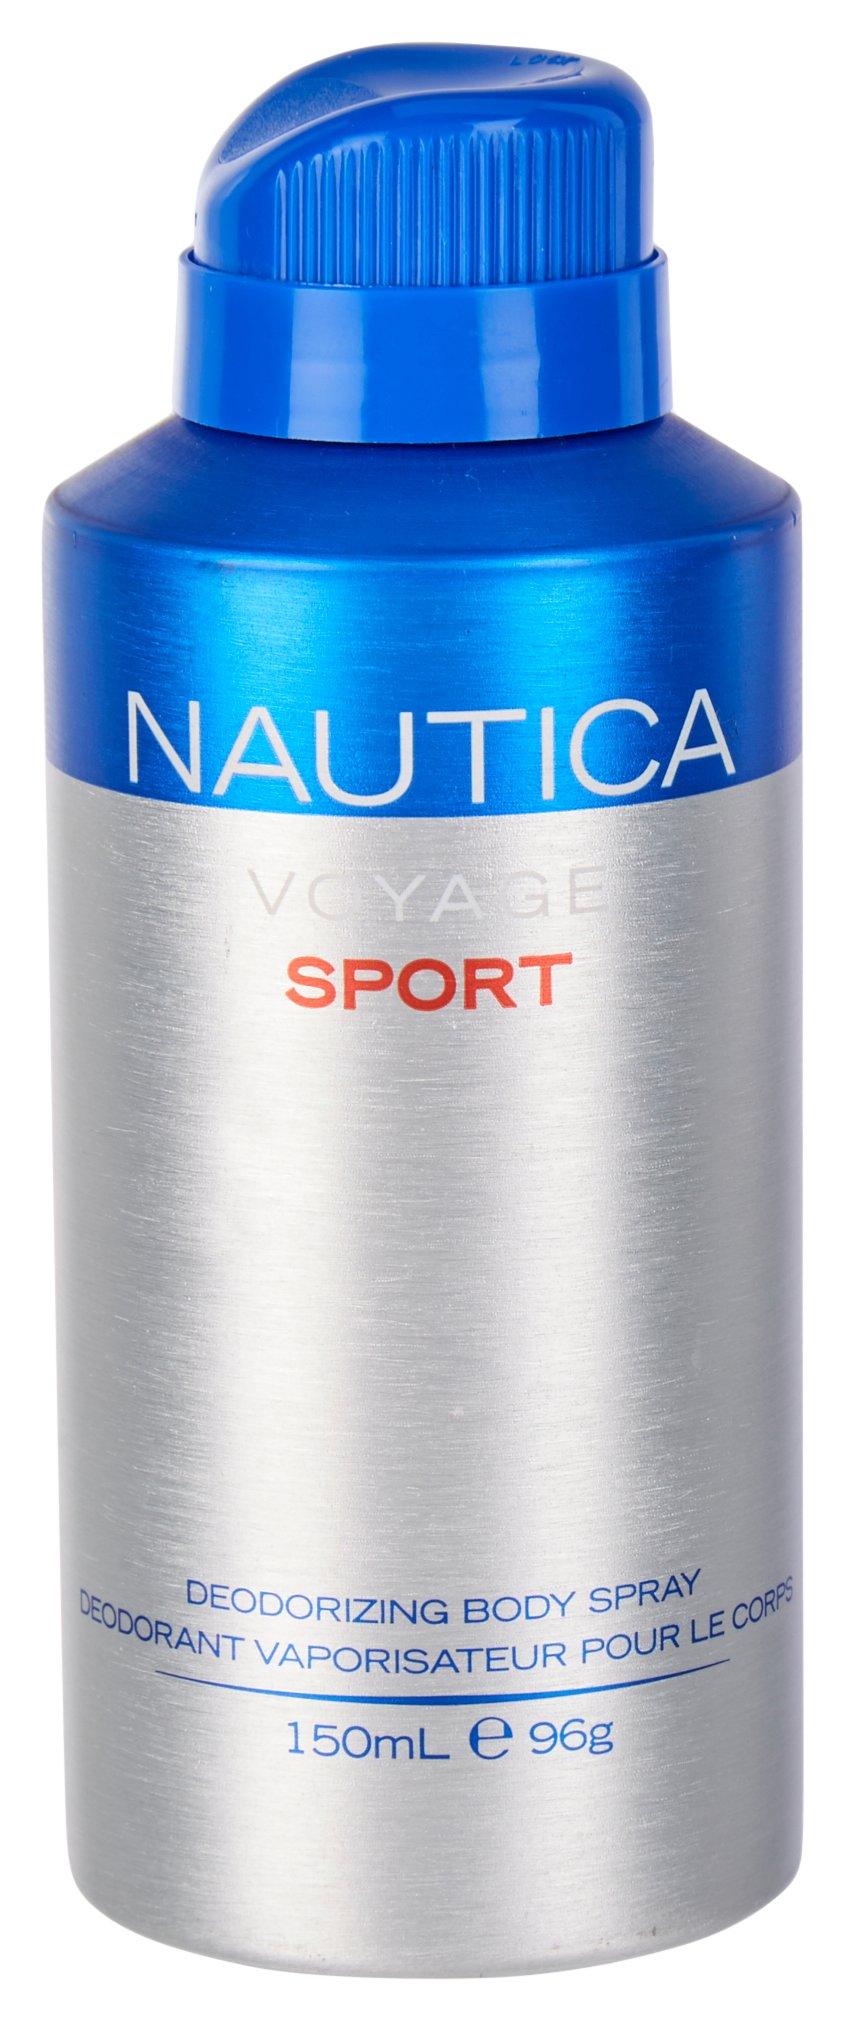 Nautica Mens Voyage Sport 5 Fl.Oz. Deodorizing Body Spray